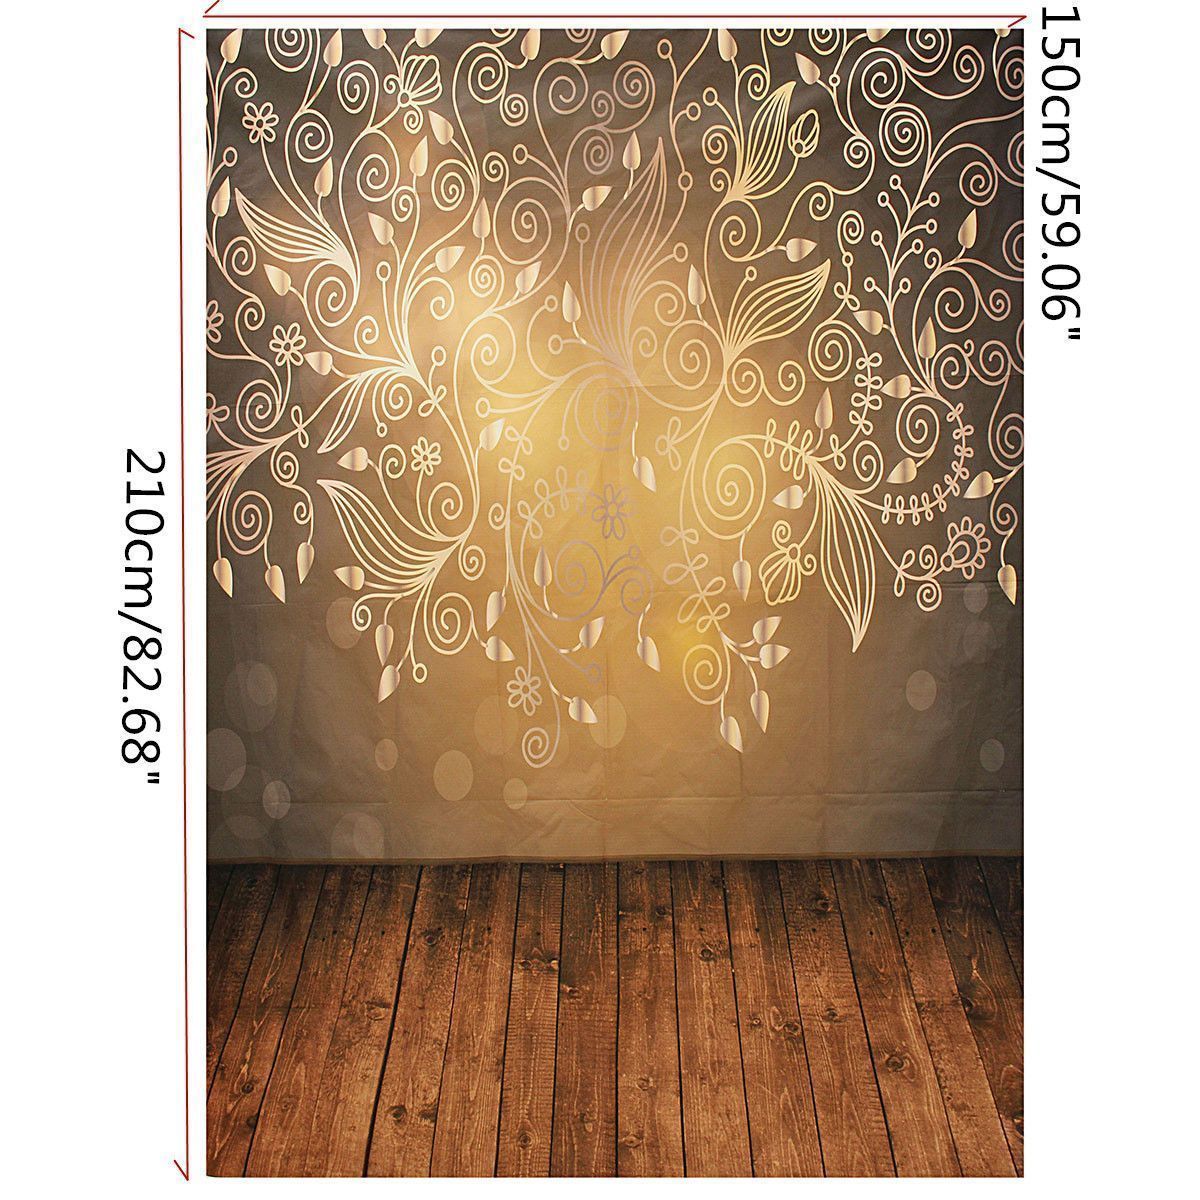 5x7ft-Vinyl-Wall-Wood-Floor-Photography-Backdrops-Photo-Studio-Background-Decor-1130347